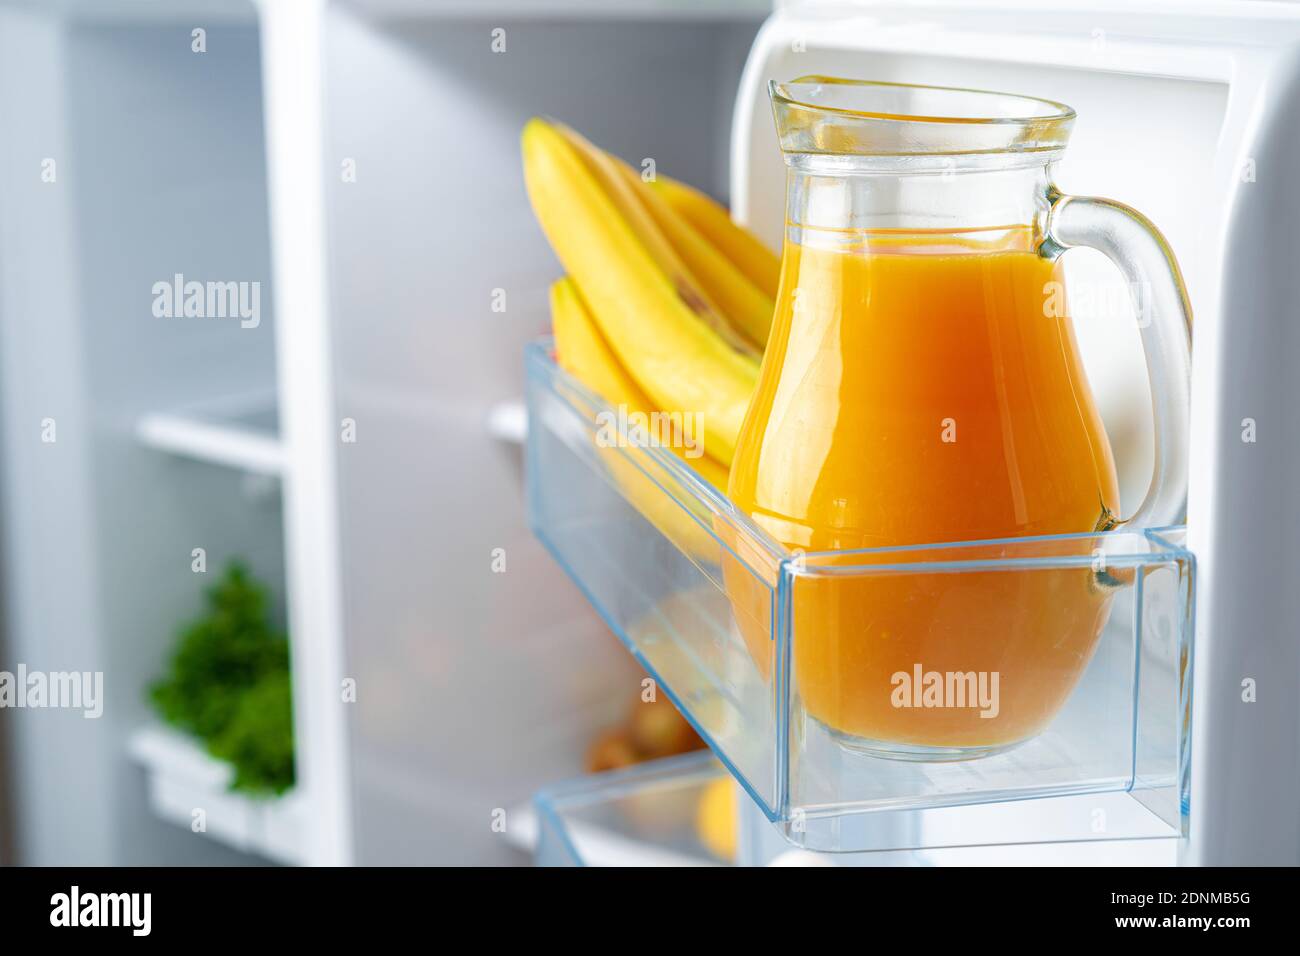 https://c8.alamy.com/comp/2DNMB5G/glass-pitcher-of-orange-juice-and-fruits-on-fridge-shelf-2DNMB5G.jpg